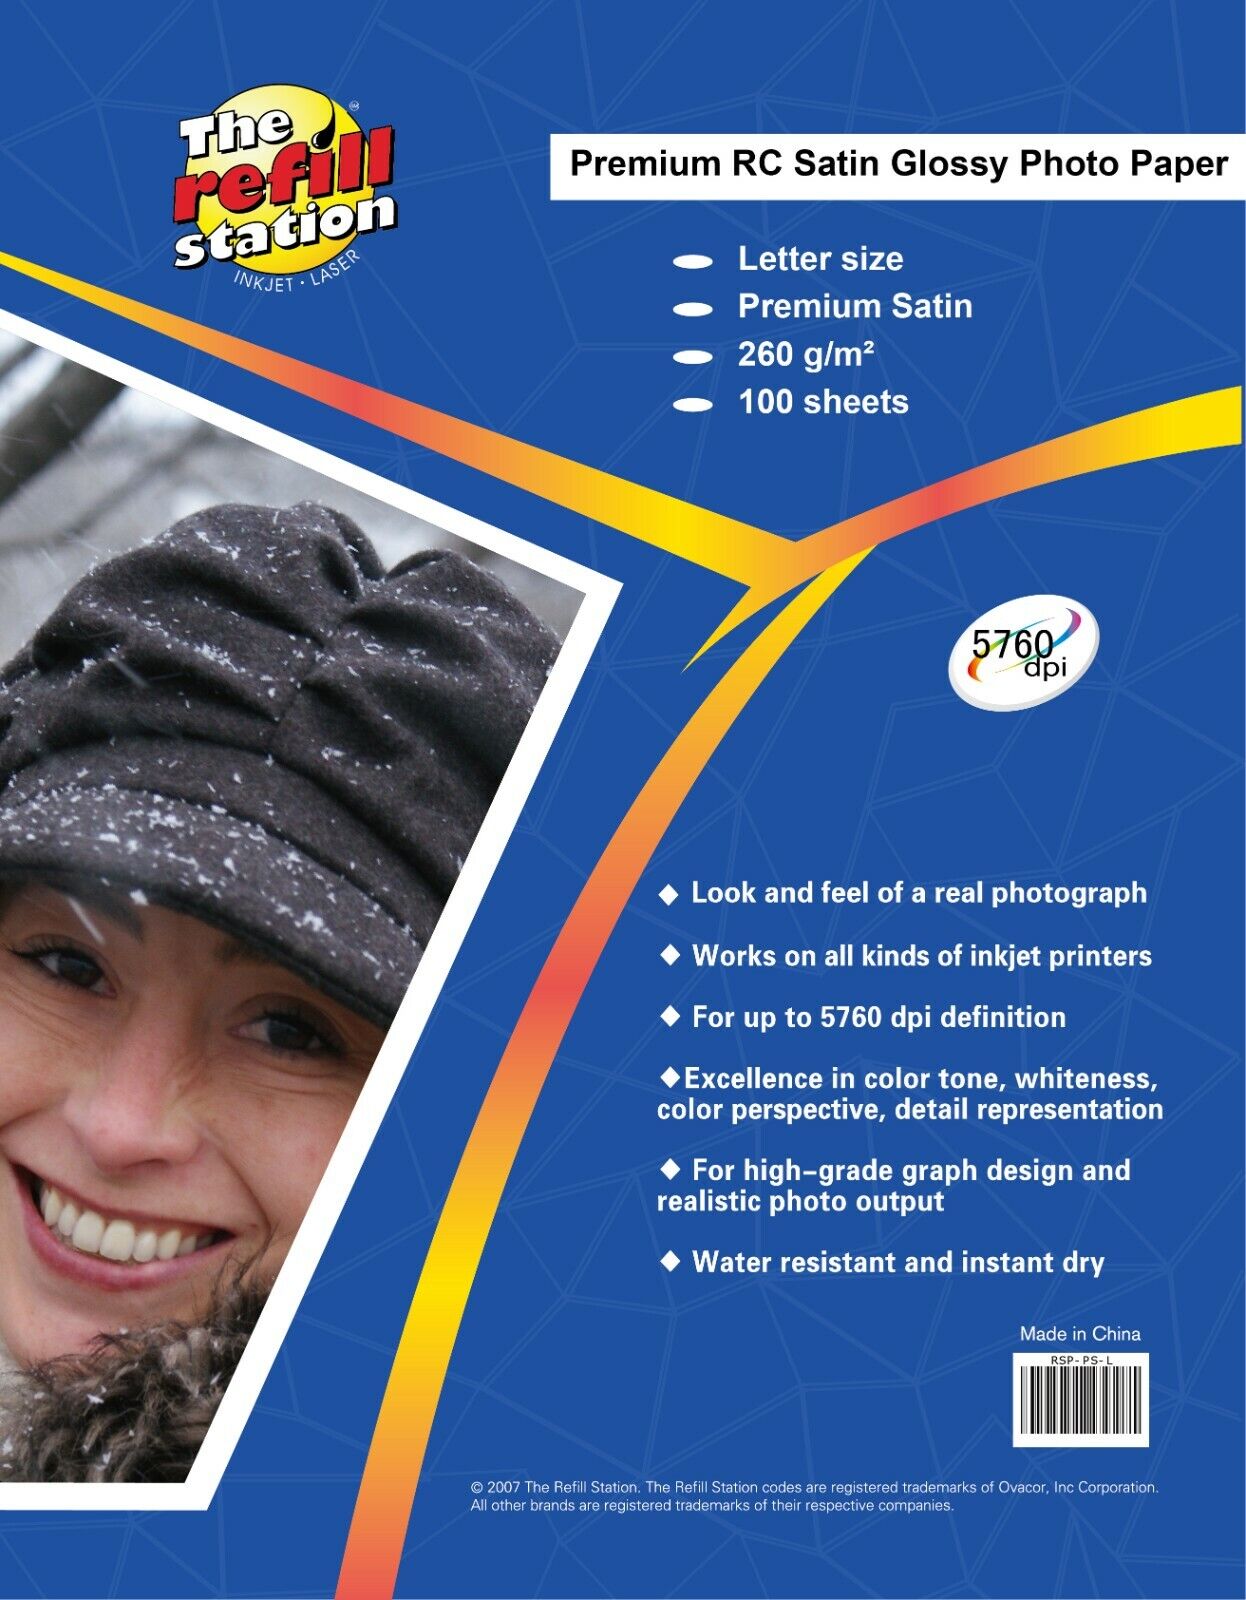 100pk RC Satin (Semi-Glossy) Photo Paper, Premium Letter Size, 260 gram weigh